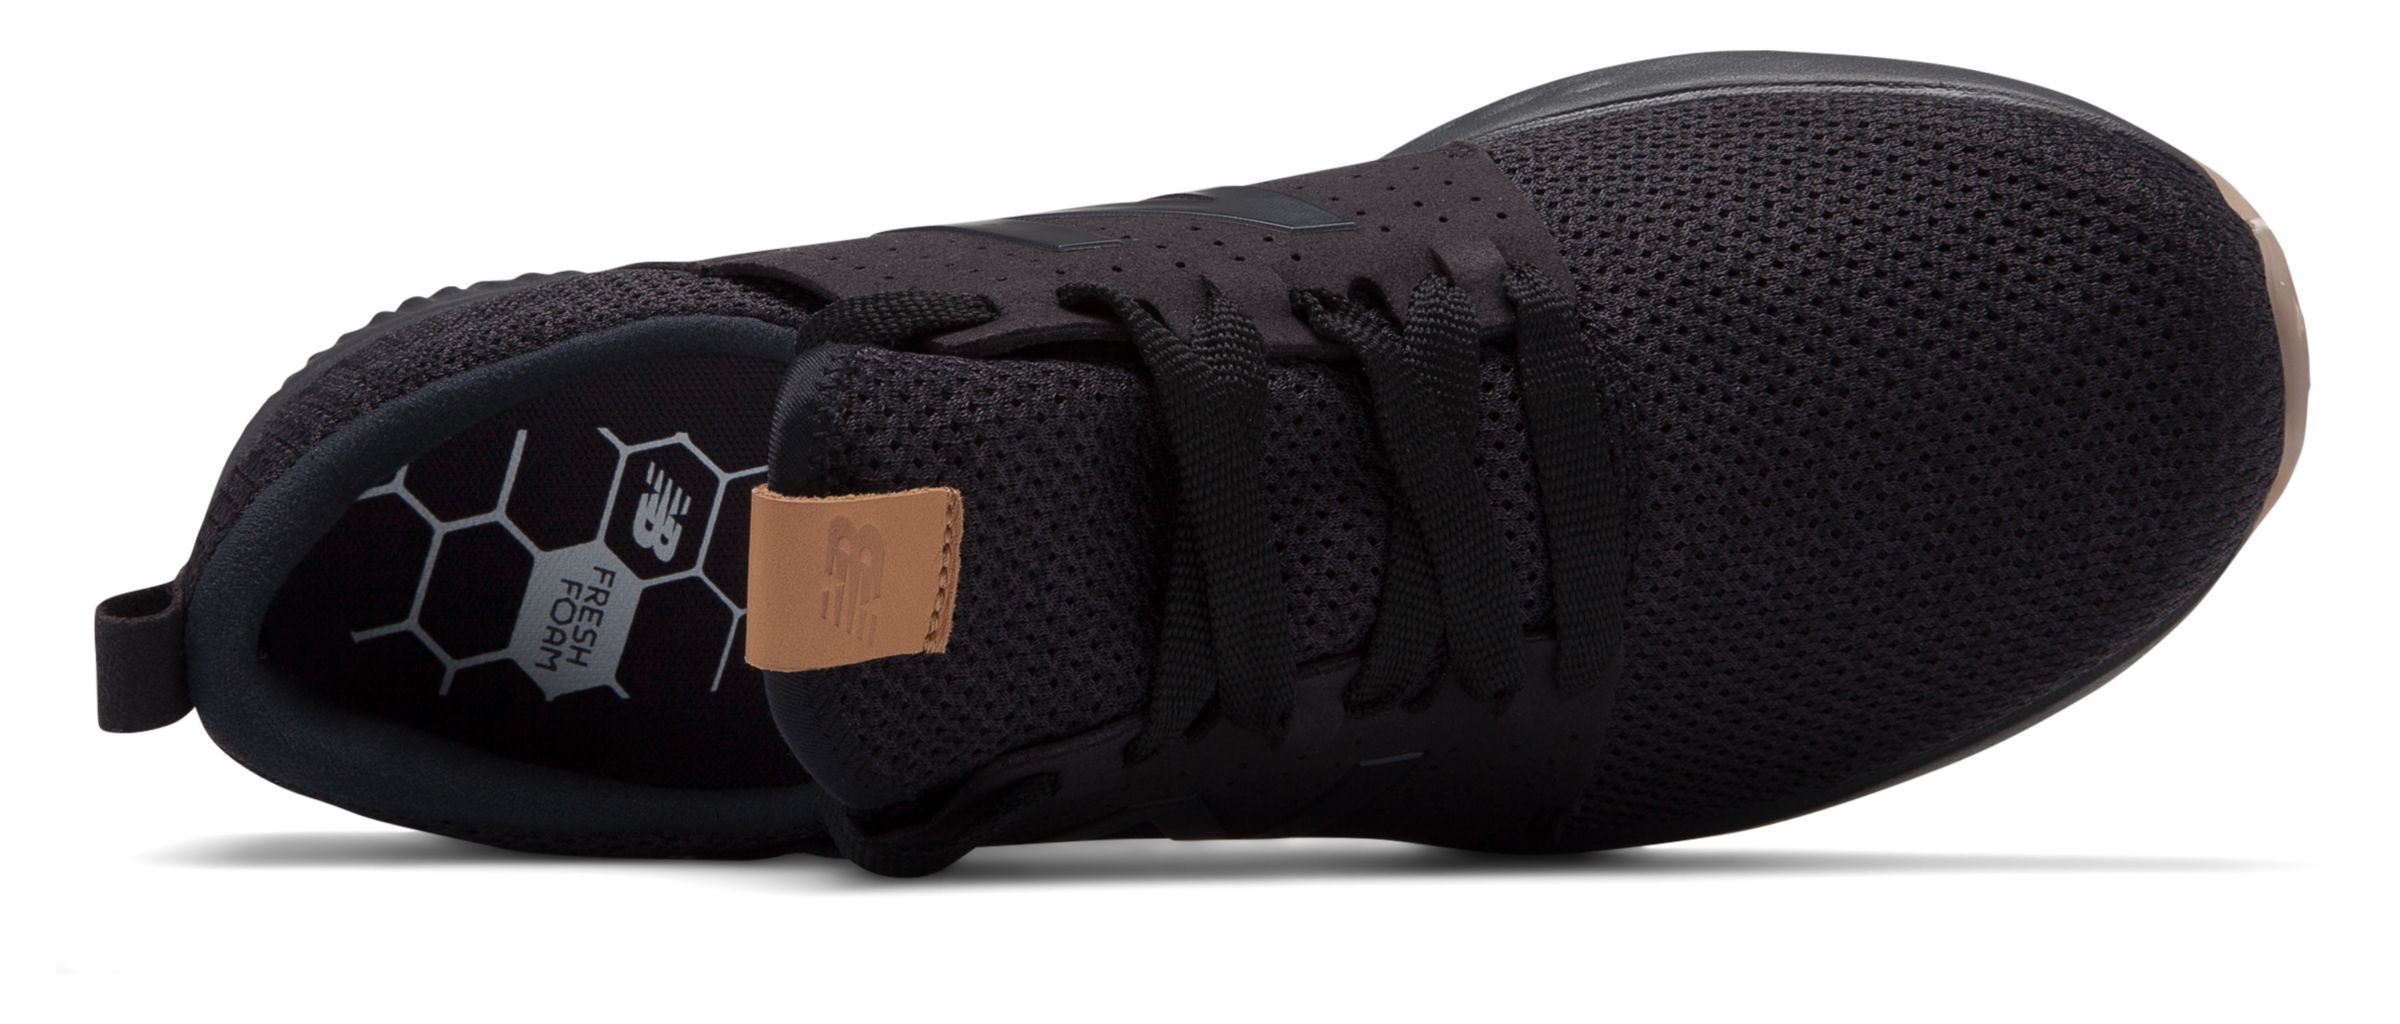 new balance men's fresh foam sport shoes black